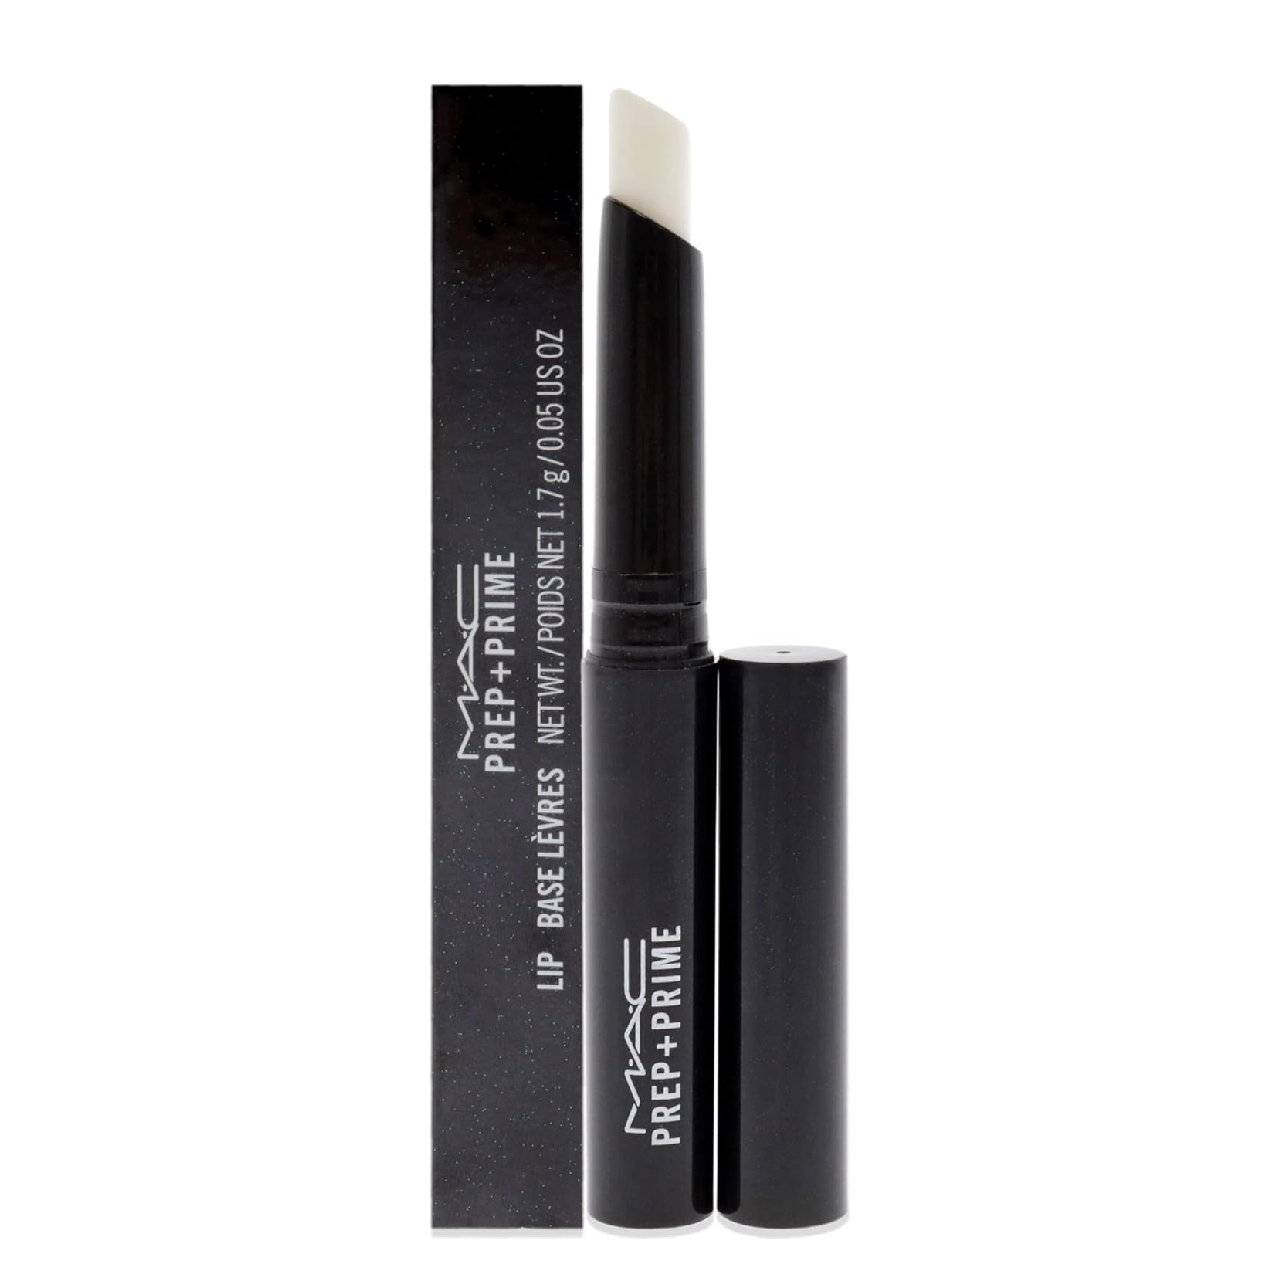 MAC Prep + Prime Lip primer tube against a white background